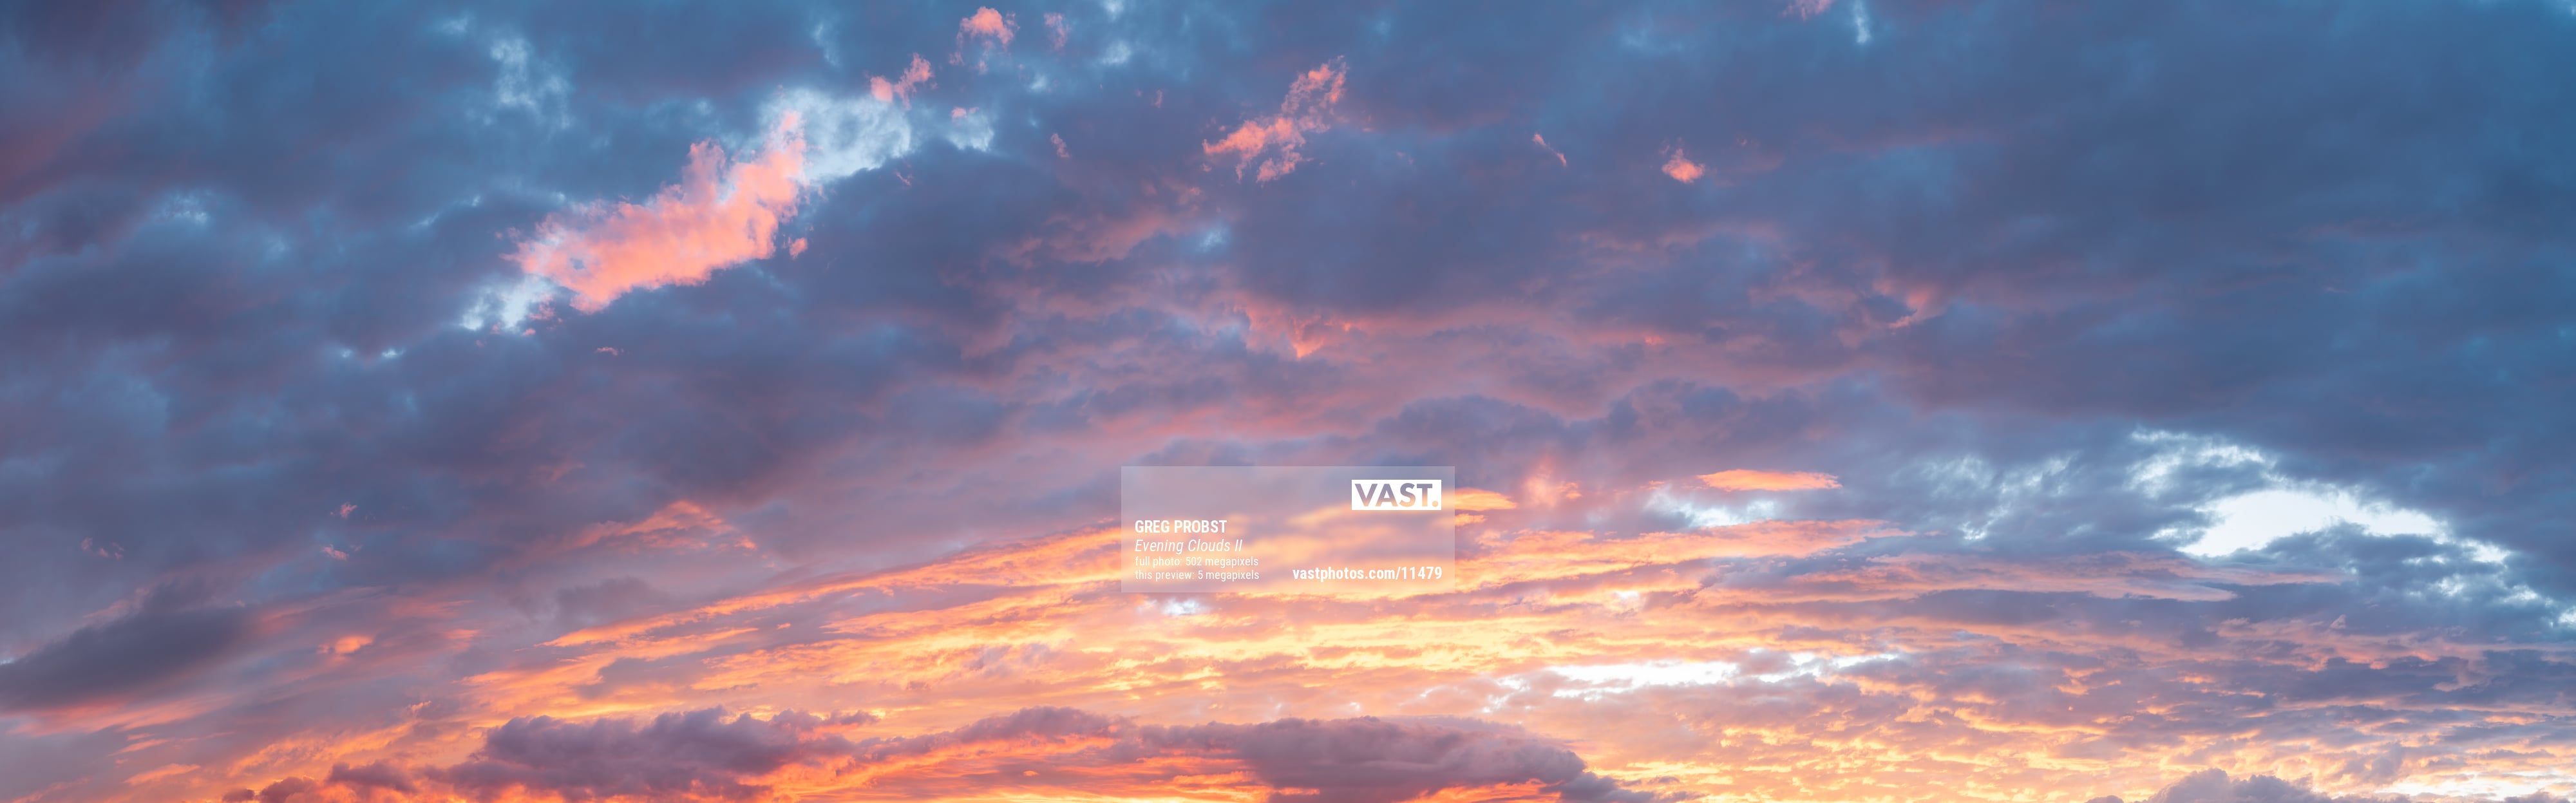 Evening sunset clouds photos - VAST